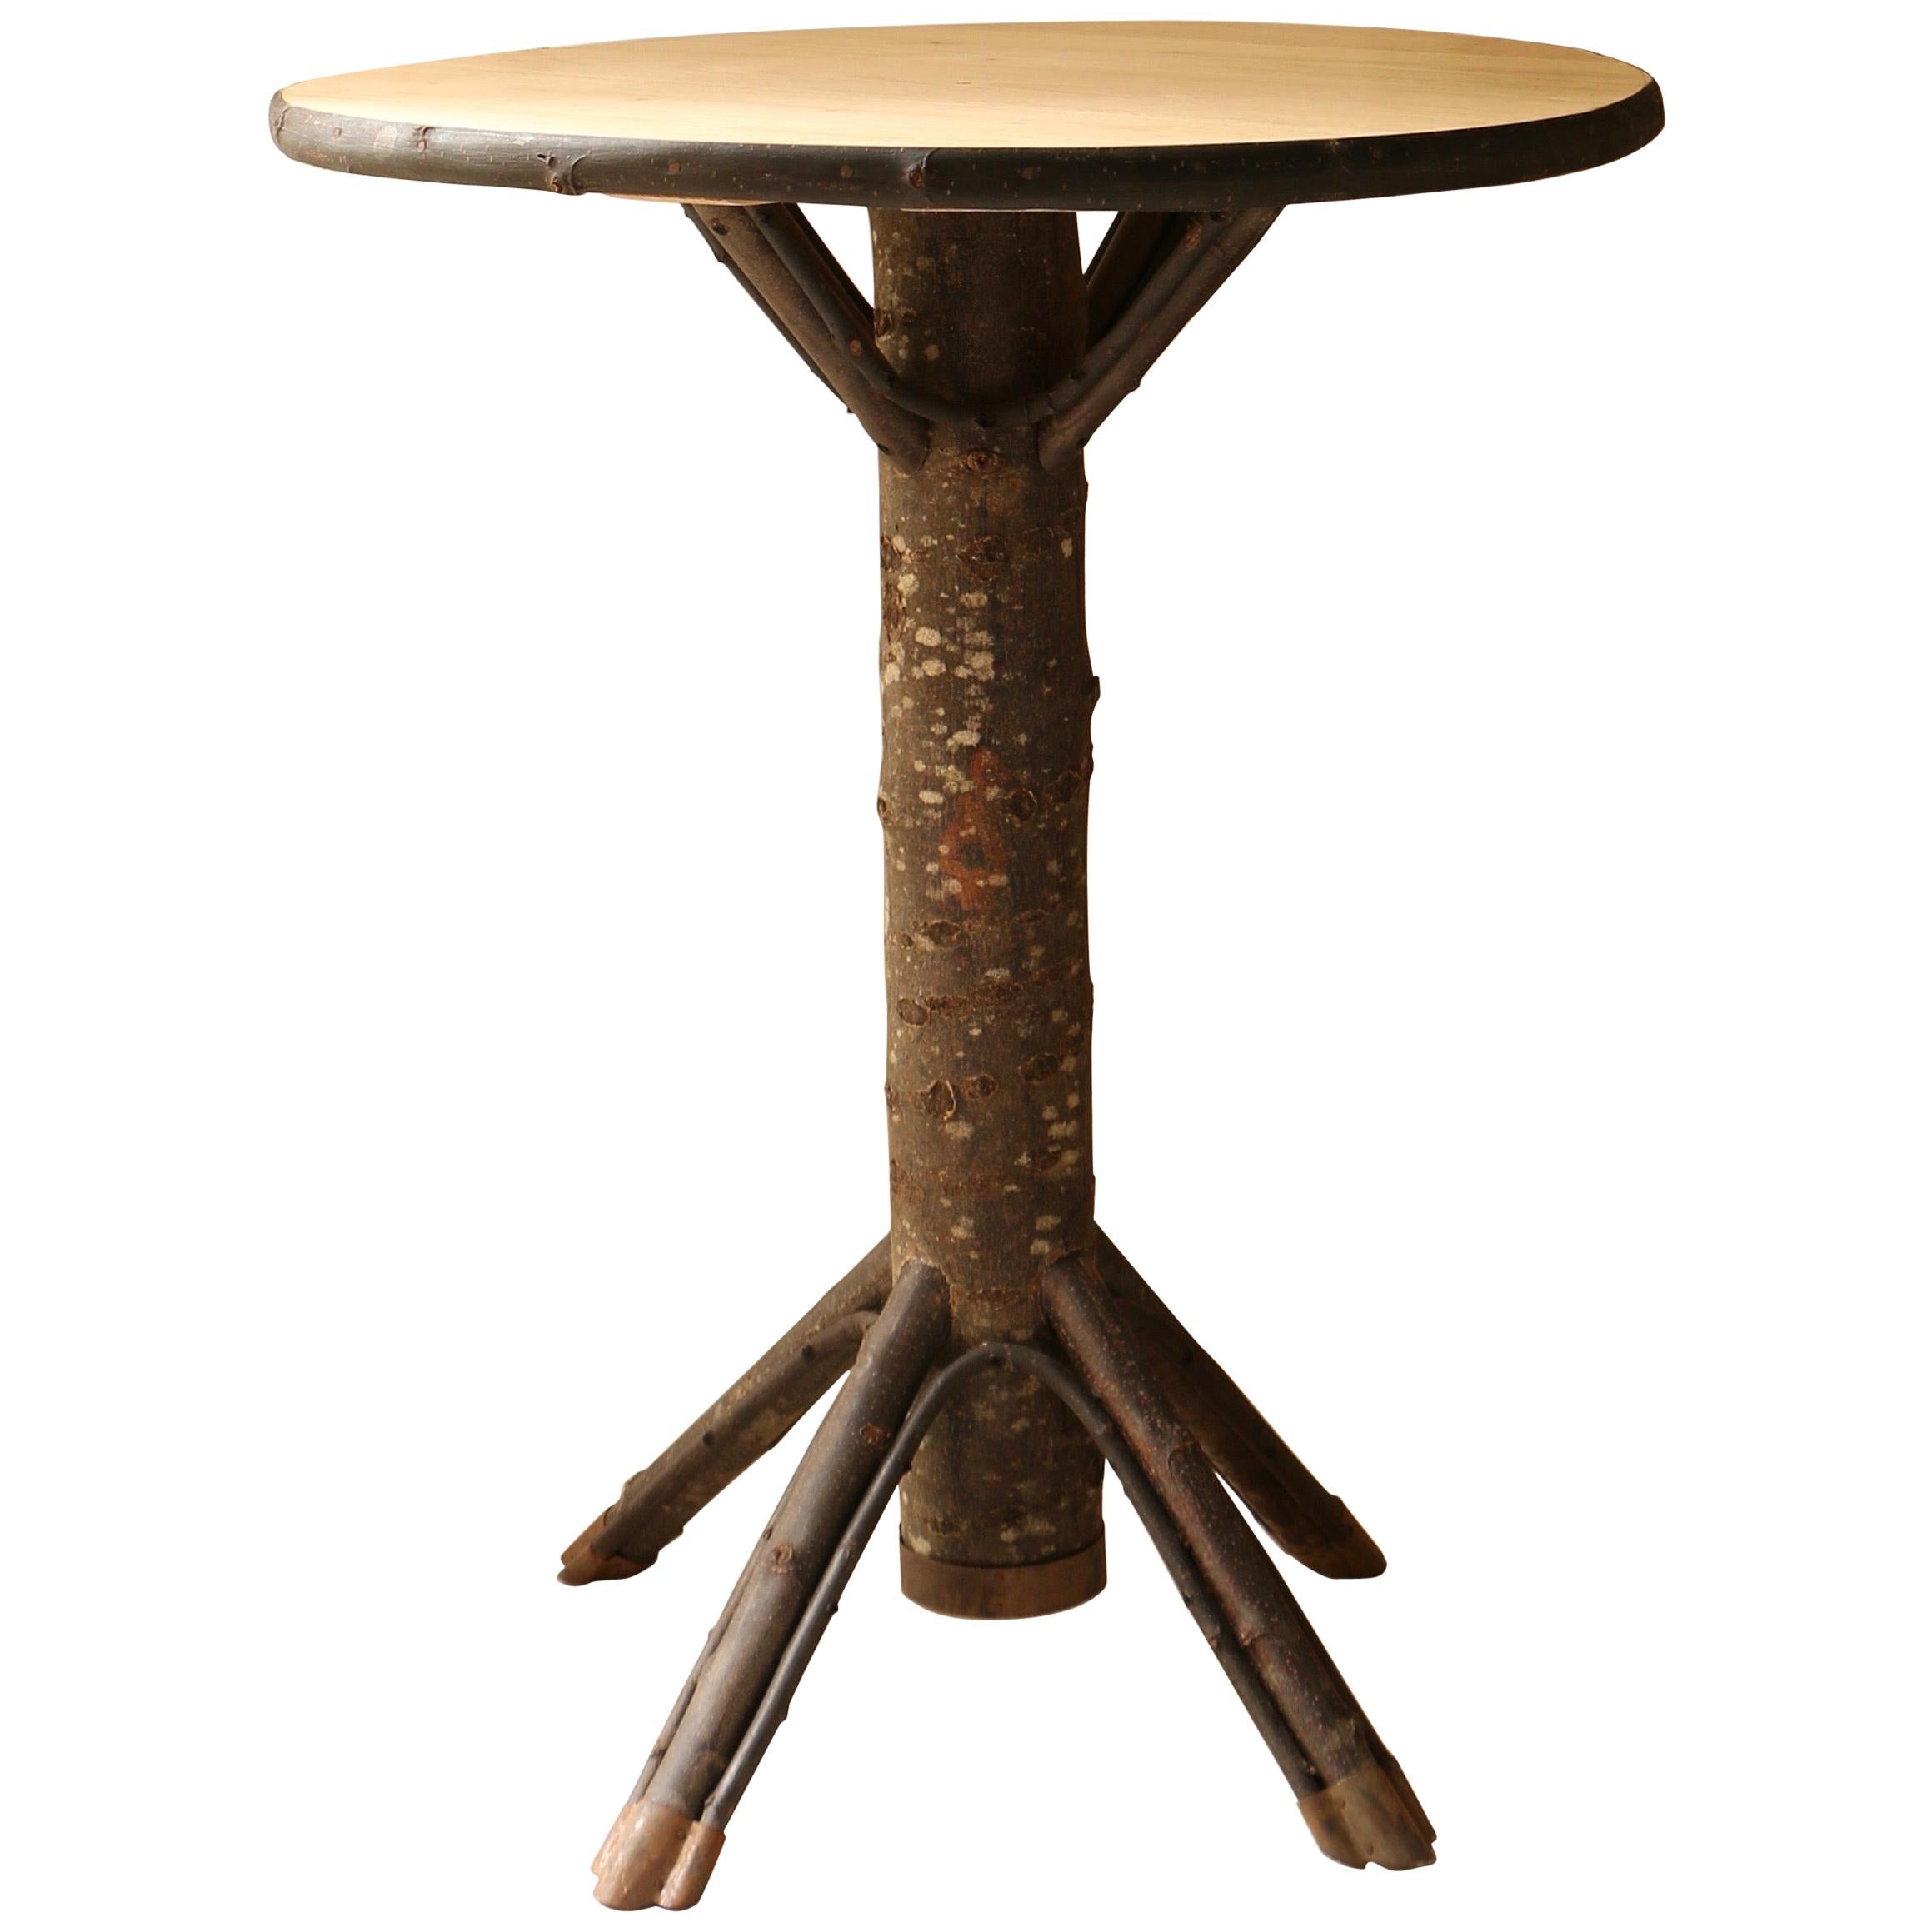 "HOUX" Table, Christian Astuguevieille, Wooden Chestnut Table